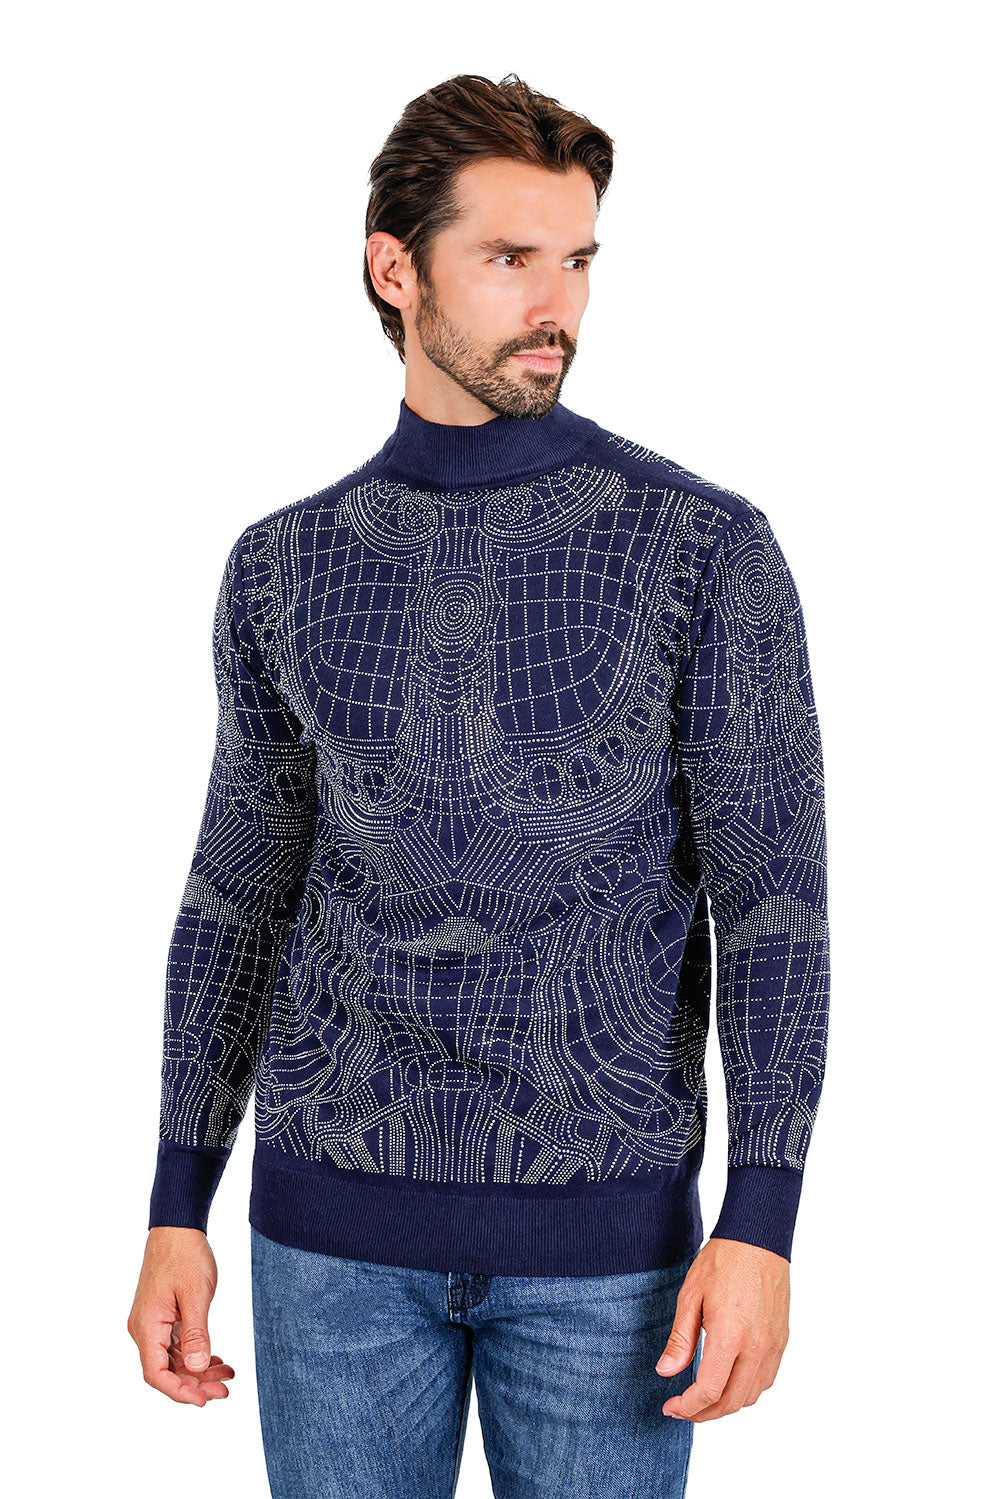 Barabas Men's Rhinestone Long Sleeve Turtleneck Sweater 3LS2107 Navy